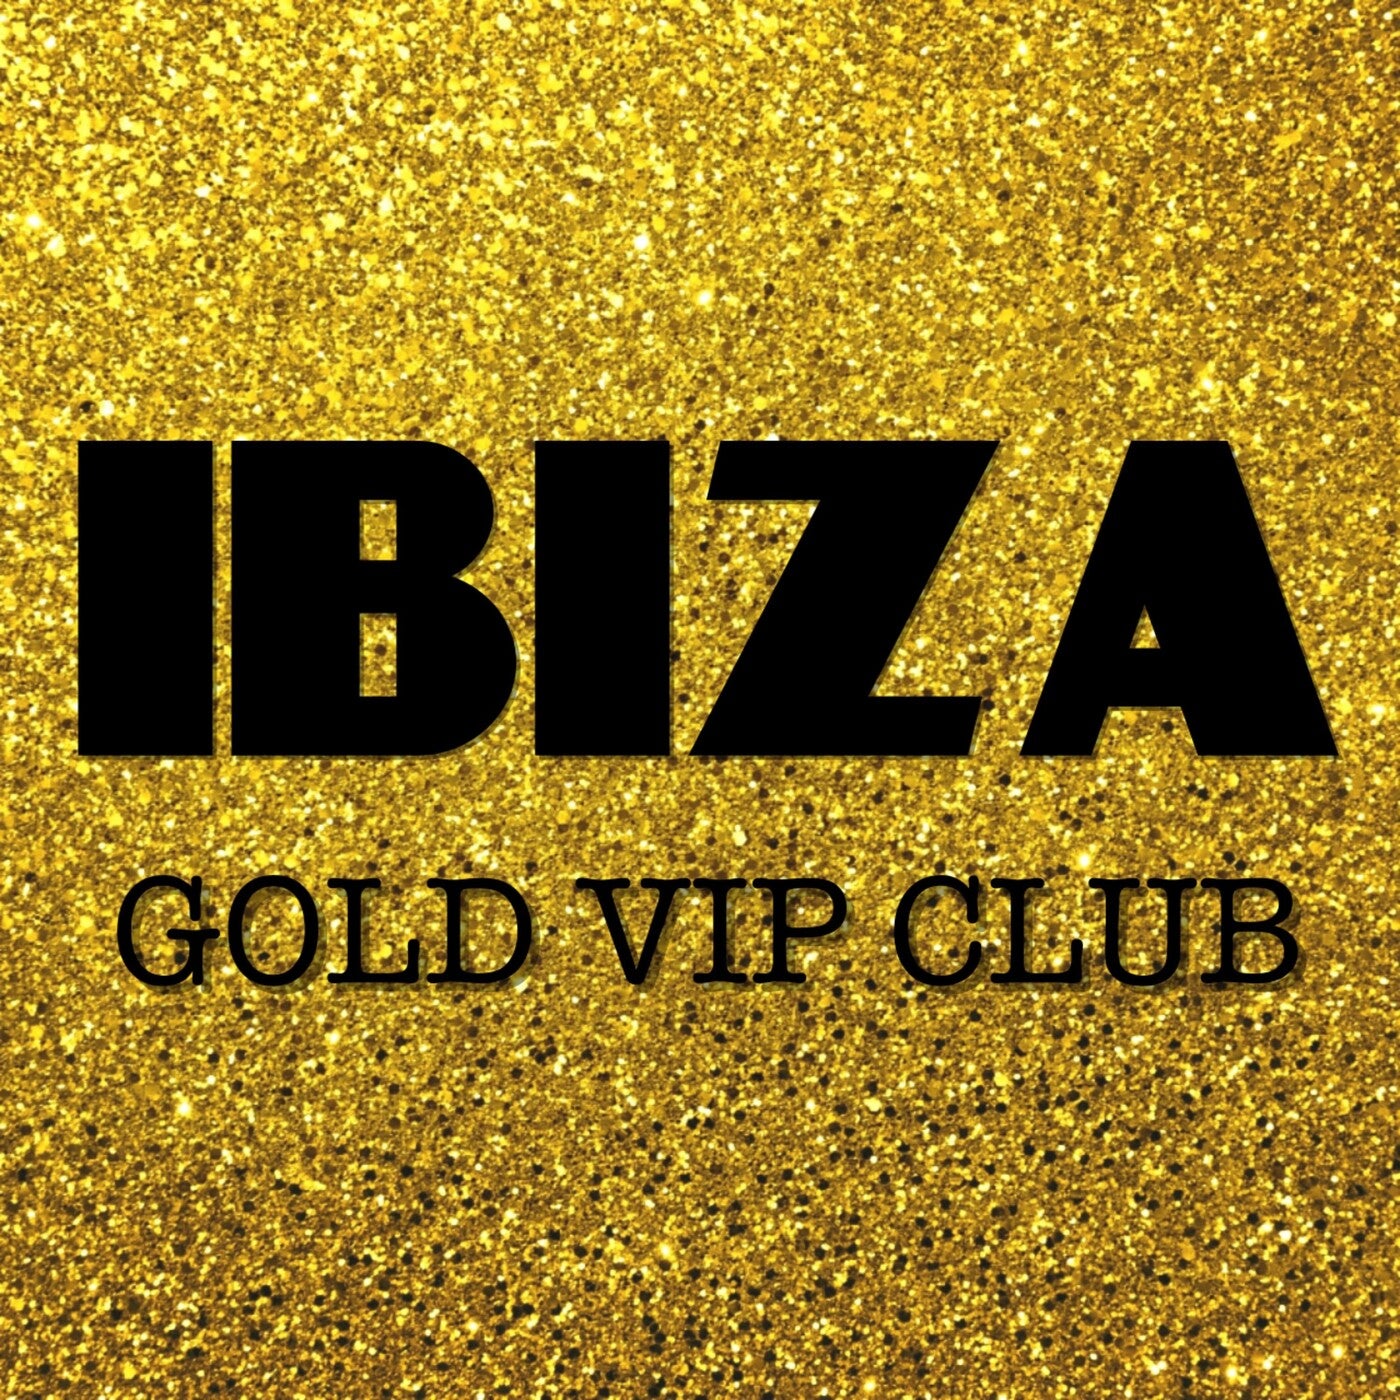 Ibiza Gold VIP Club